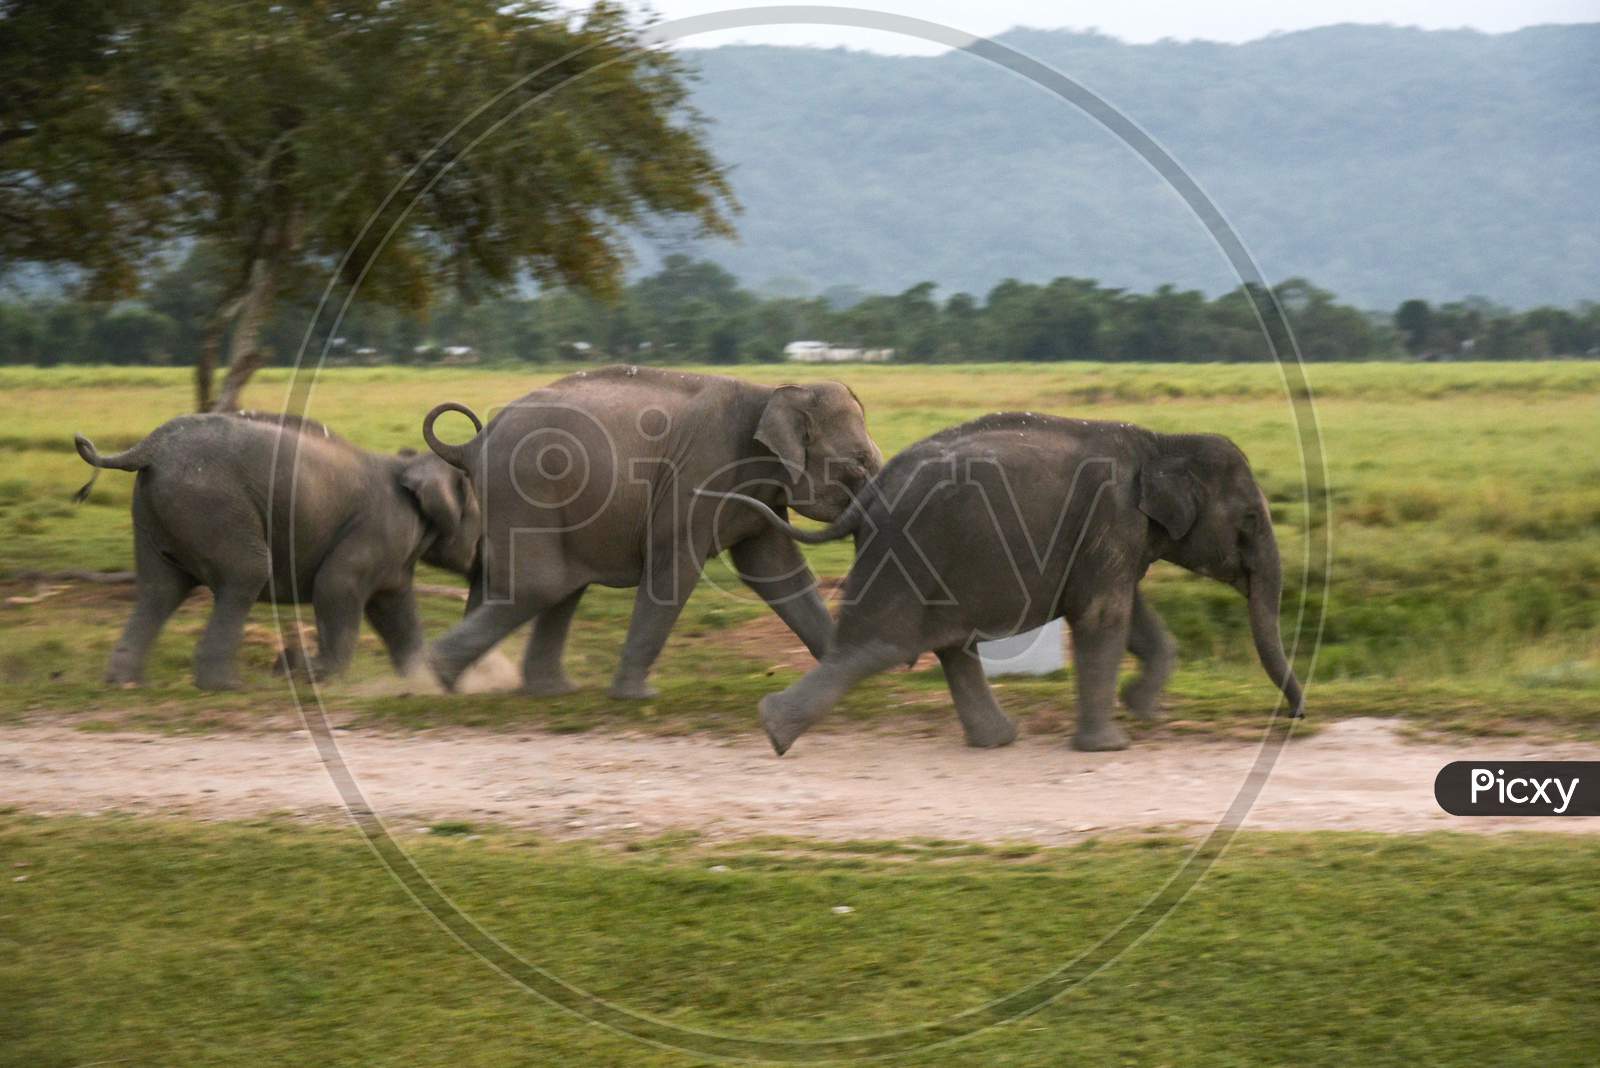 Elephants Running In Kaziranga National Park, Some 220 Km From Guwahati, The Capital City Of India'S Northeastern State Of Assam